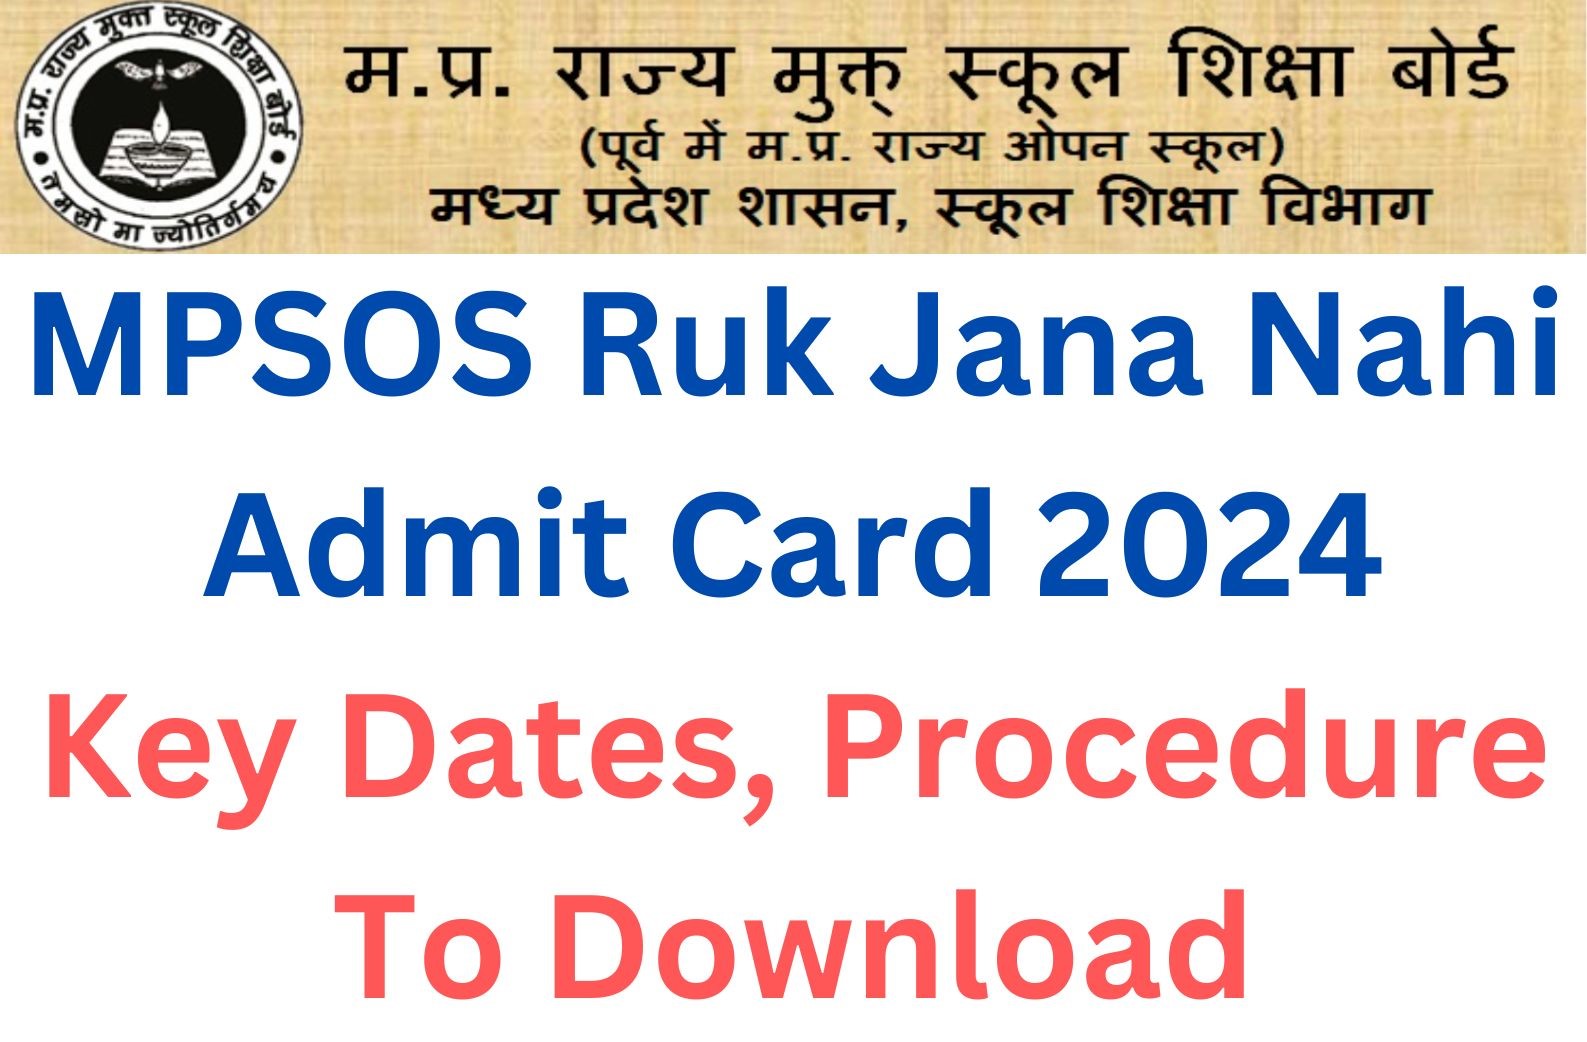 MPSOS Ruk Jana Nahi Admit Card 2024: Key Dates, Procedure To Download